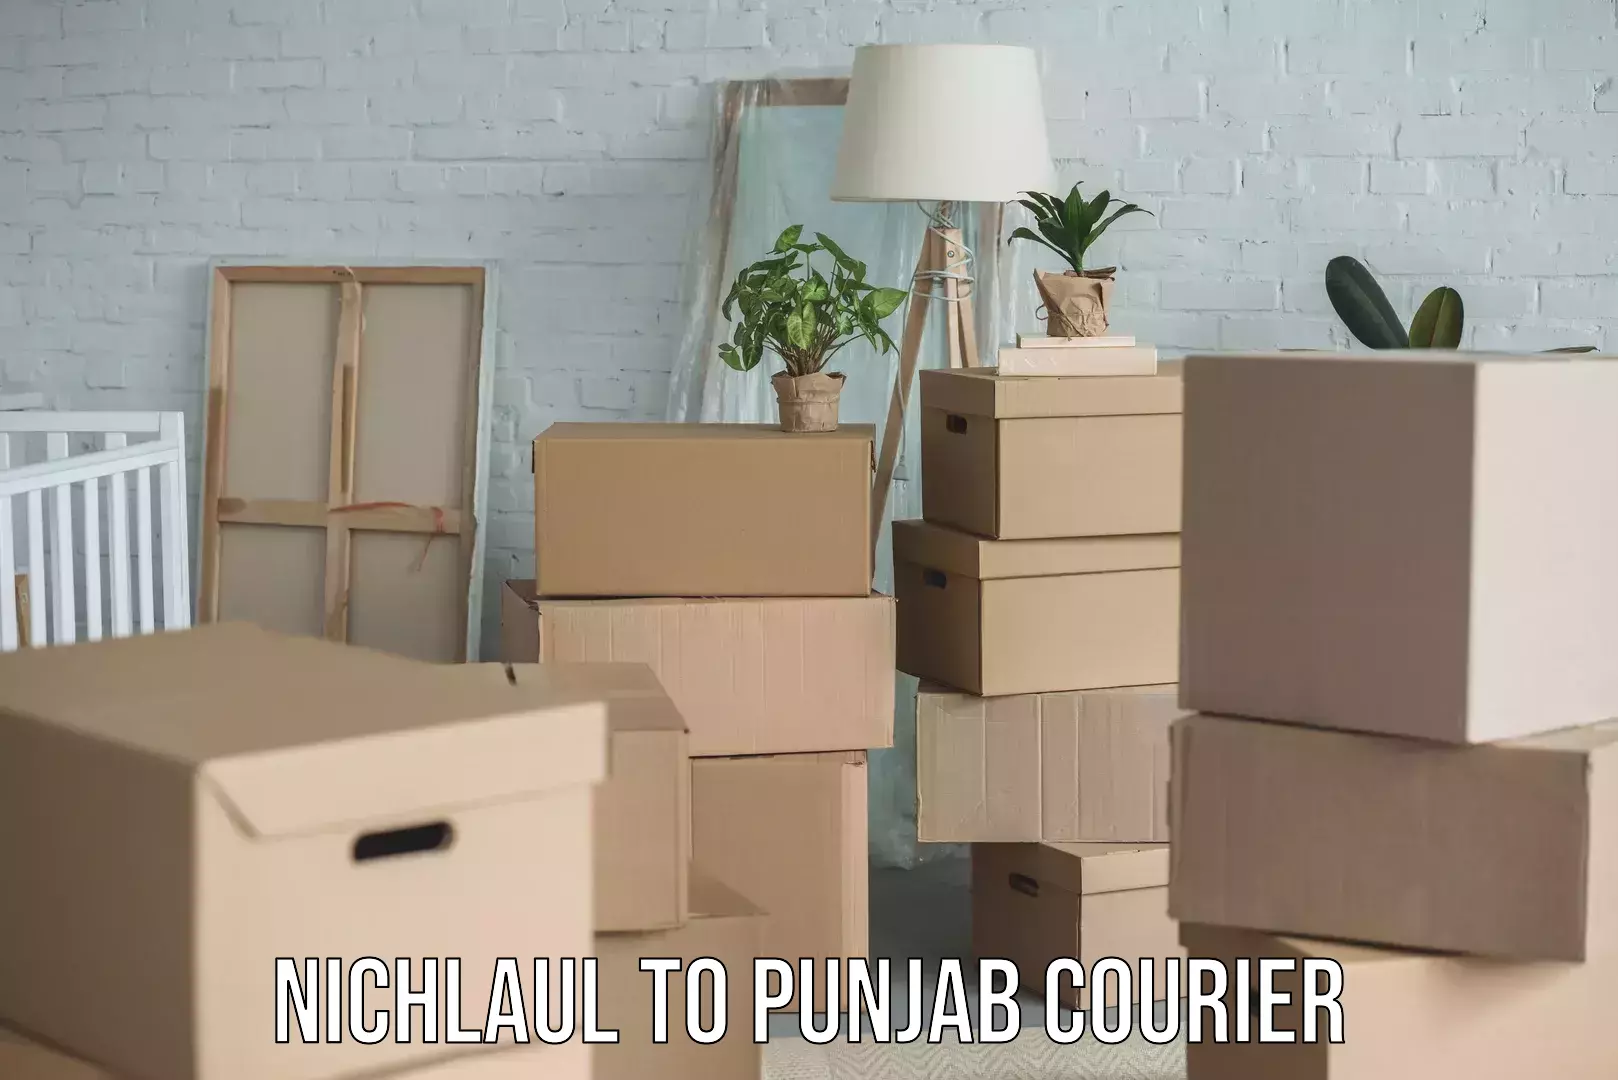 Professional moving company Nichlaul to Punjab